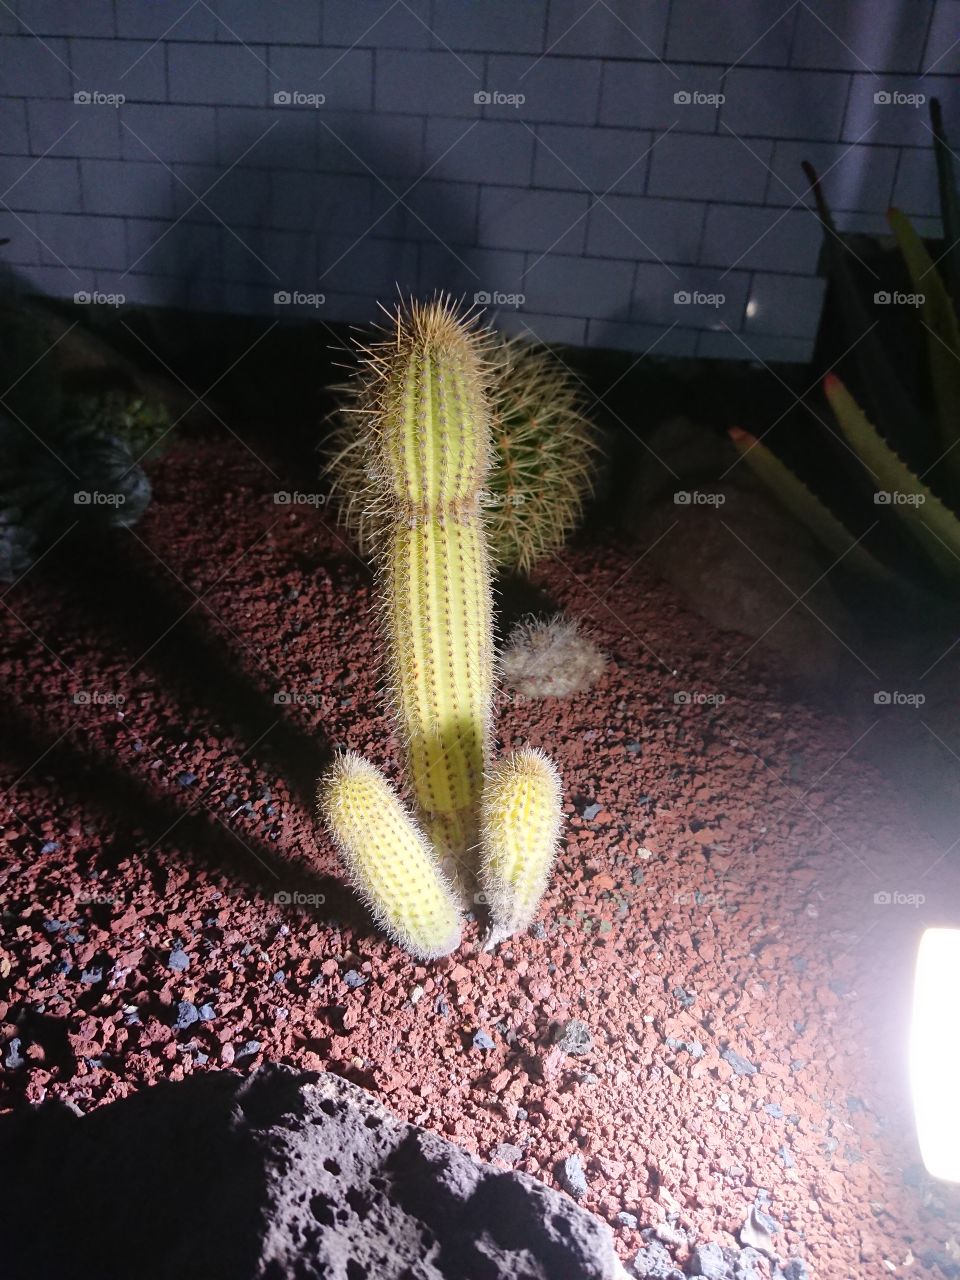 Strange looking cactus